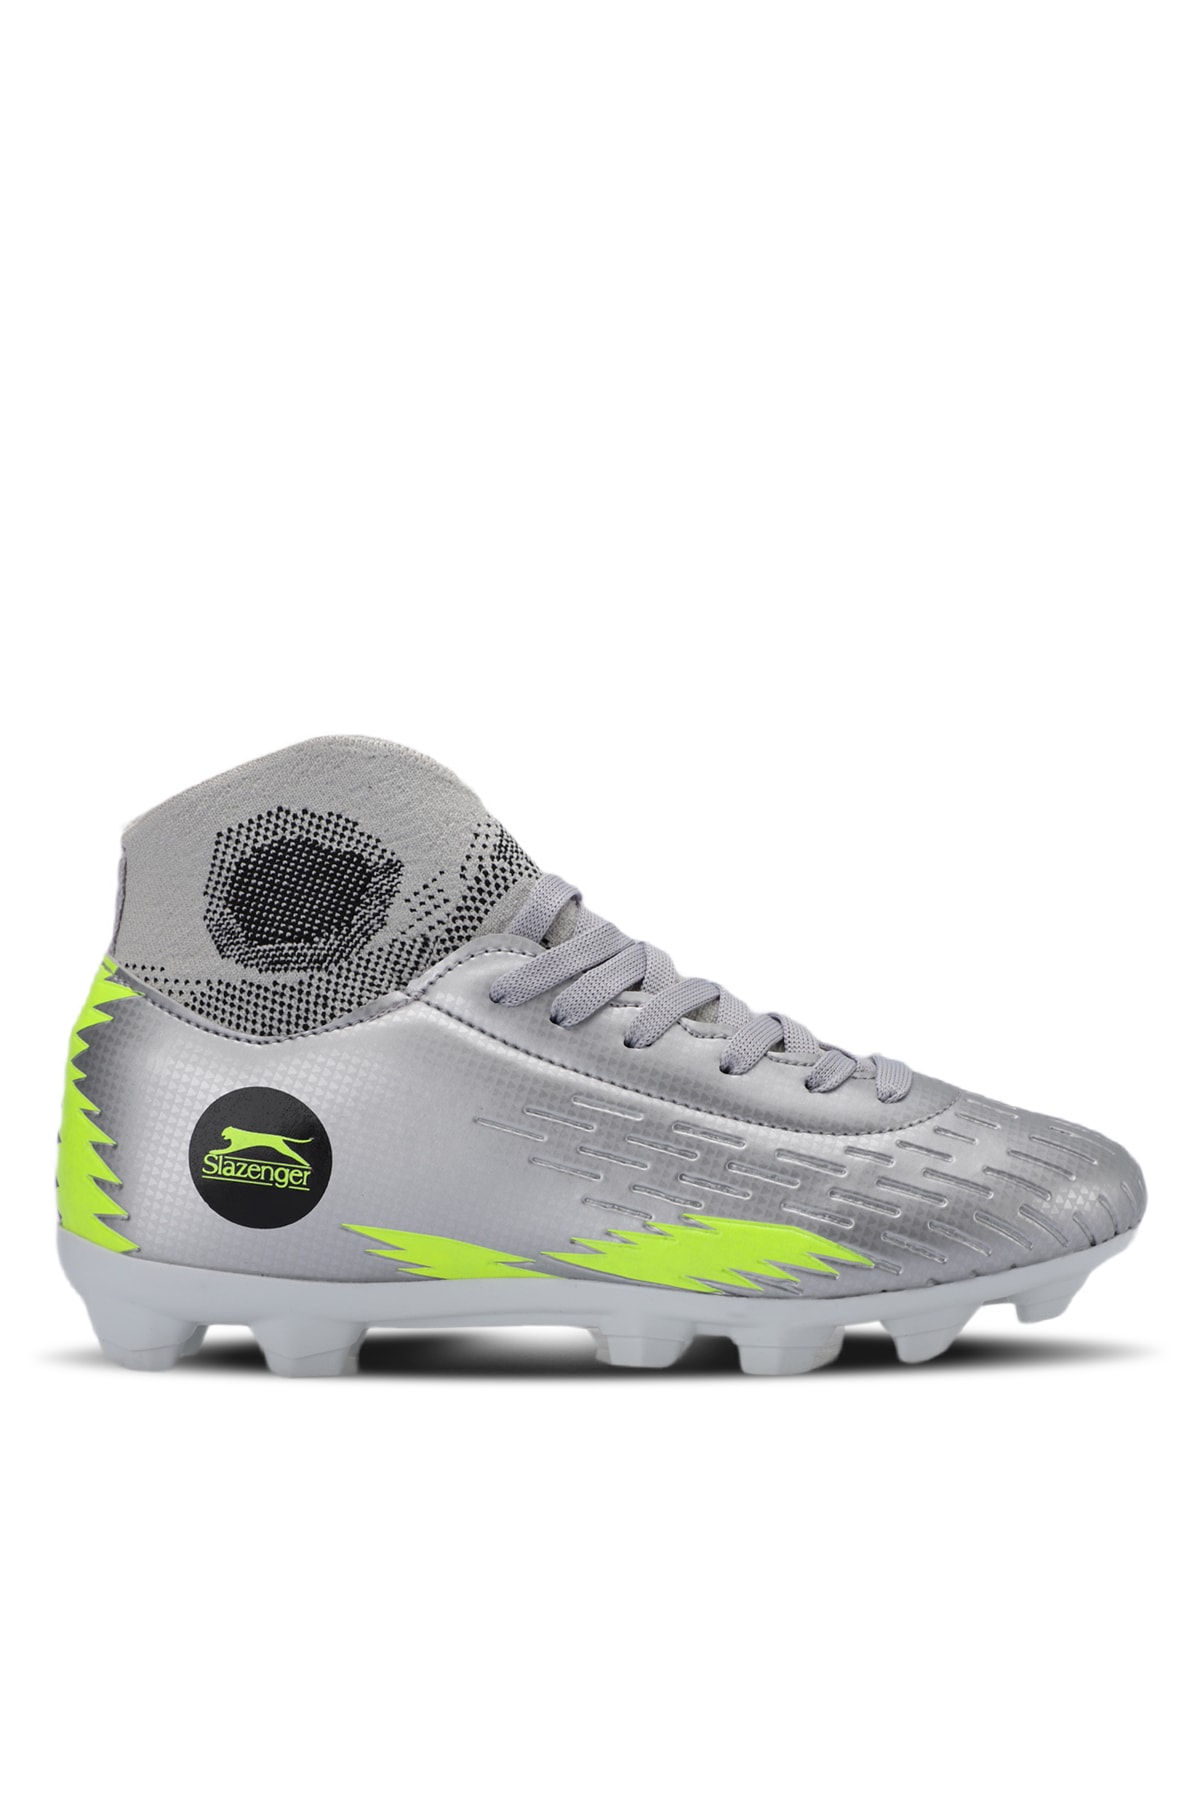 Slazenger Hadas Krp Football Men's Astroturf Shoes Gray